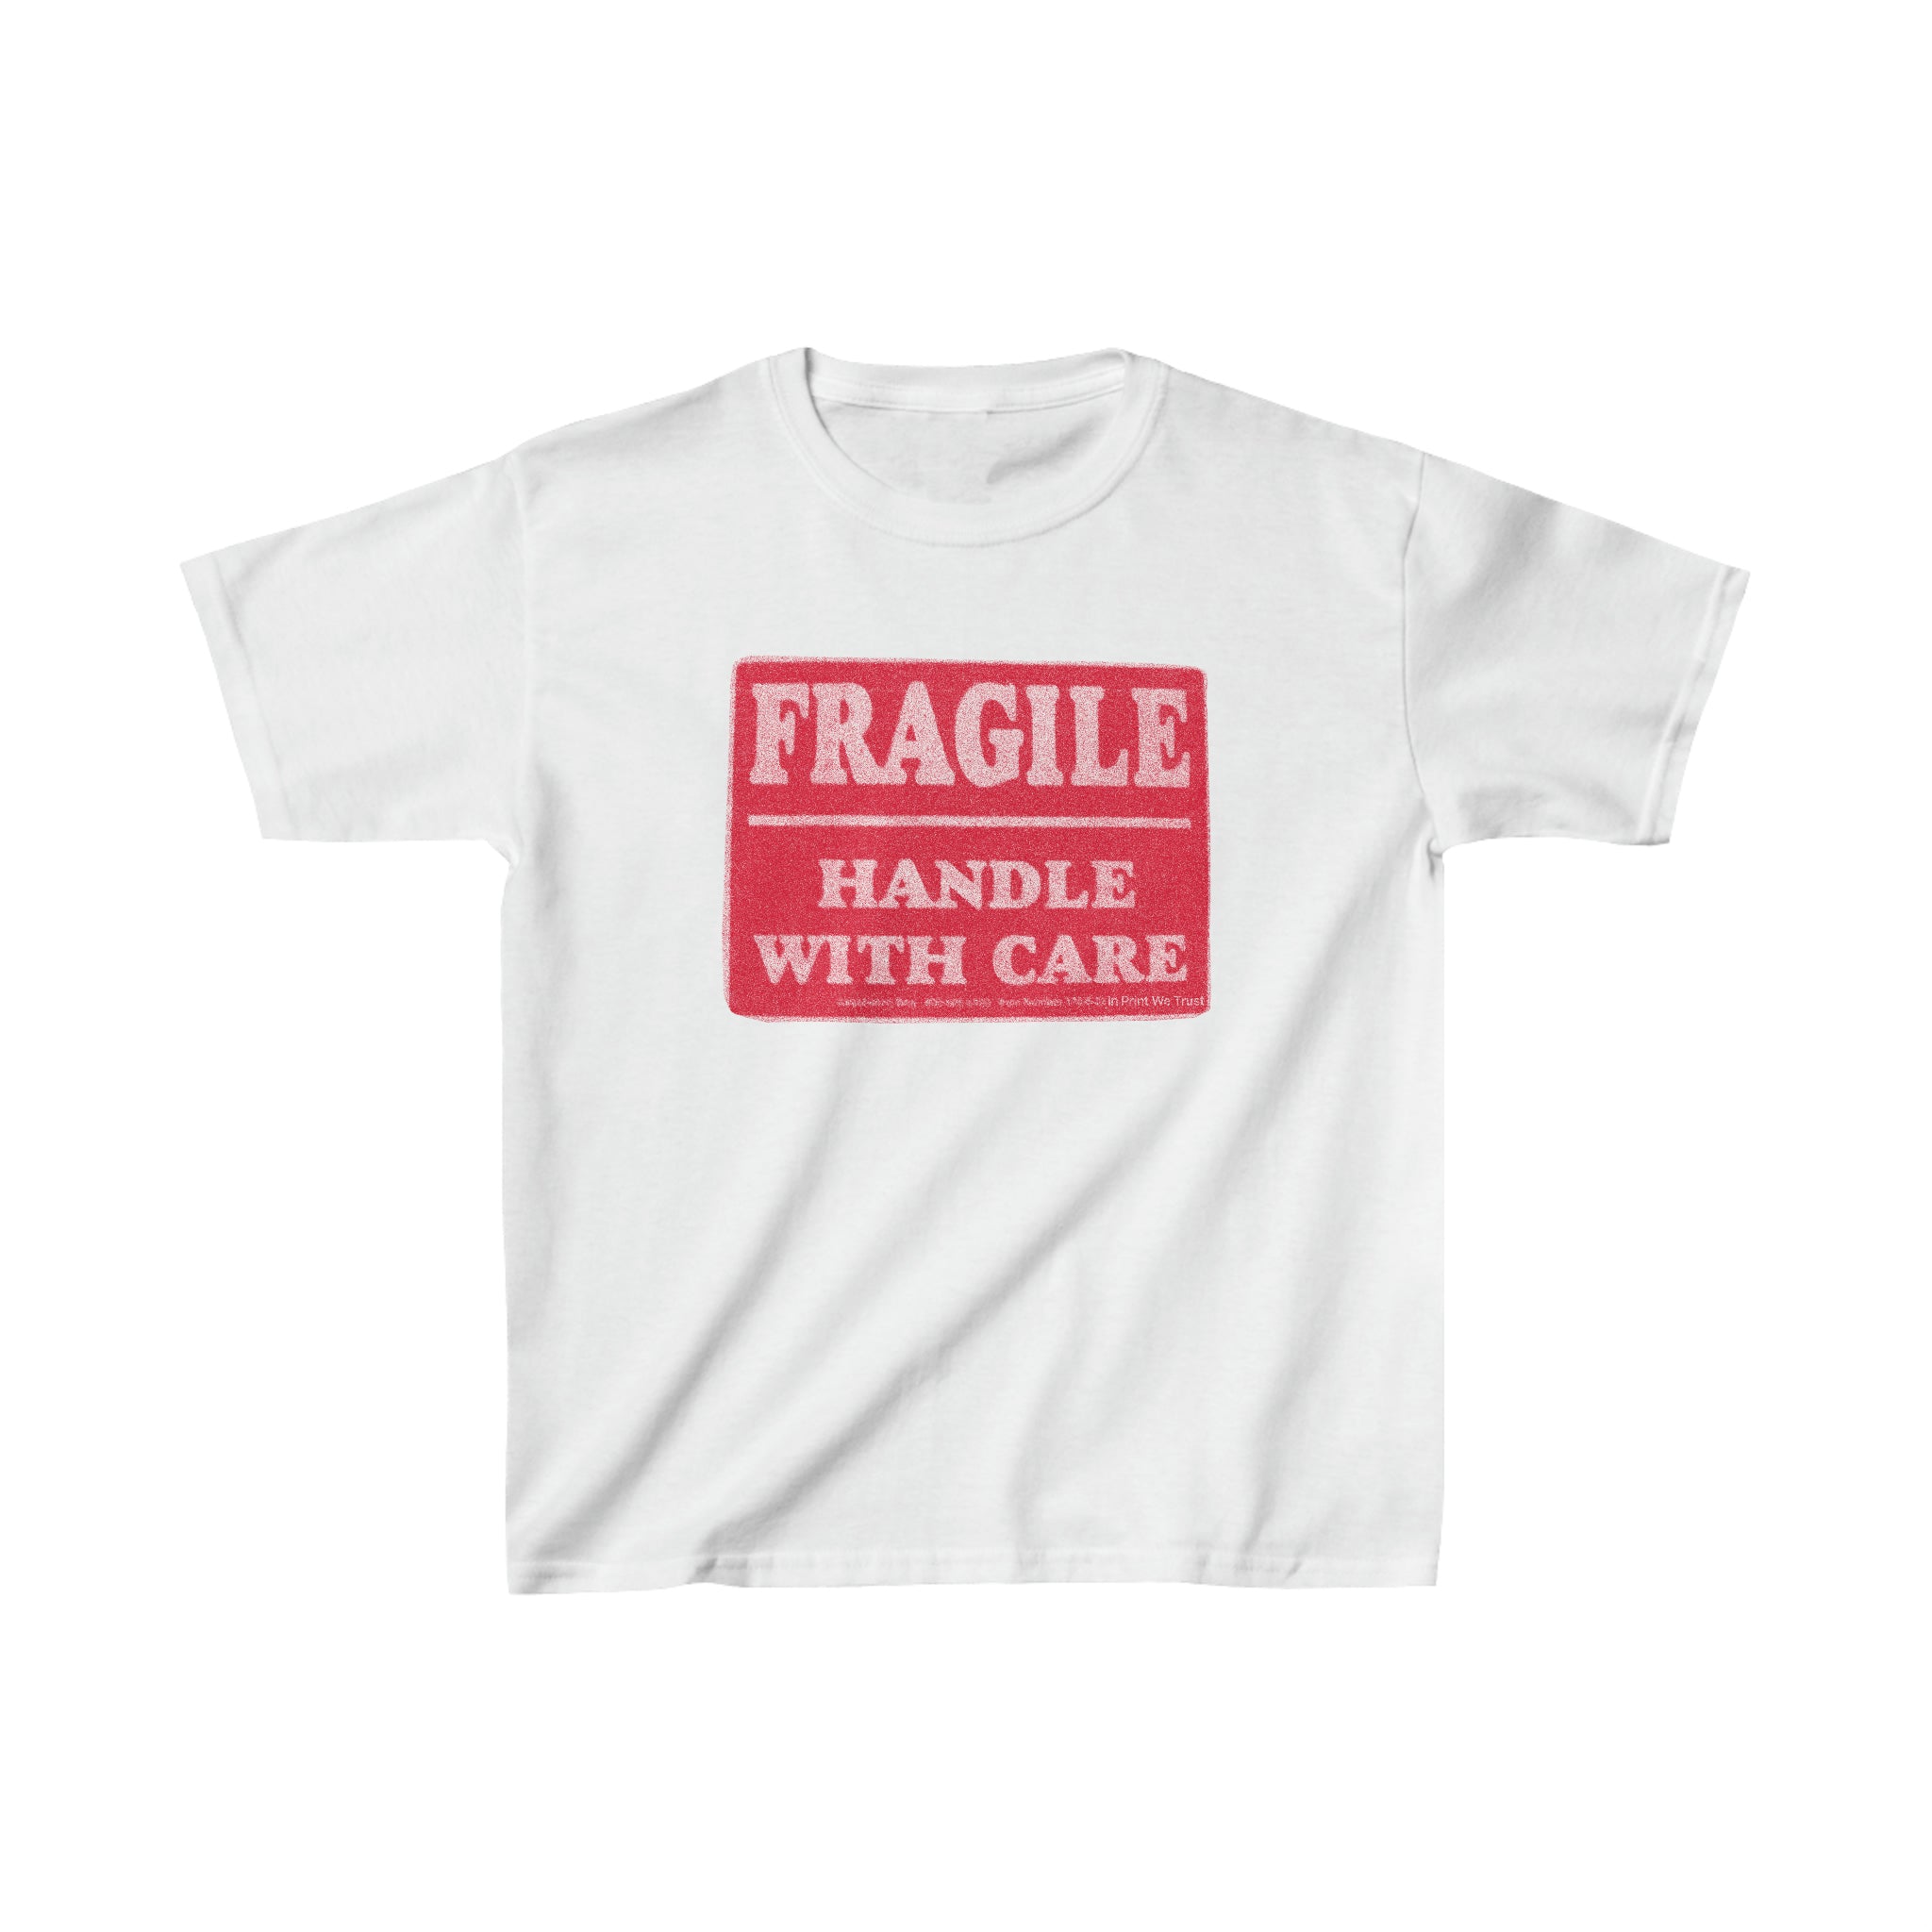 'Fragile' baby tee - In Print We Trust